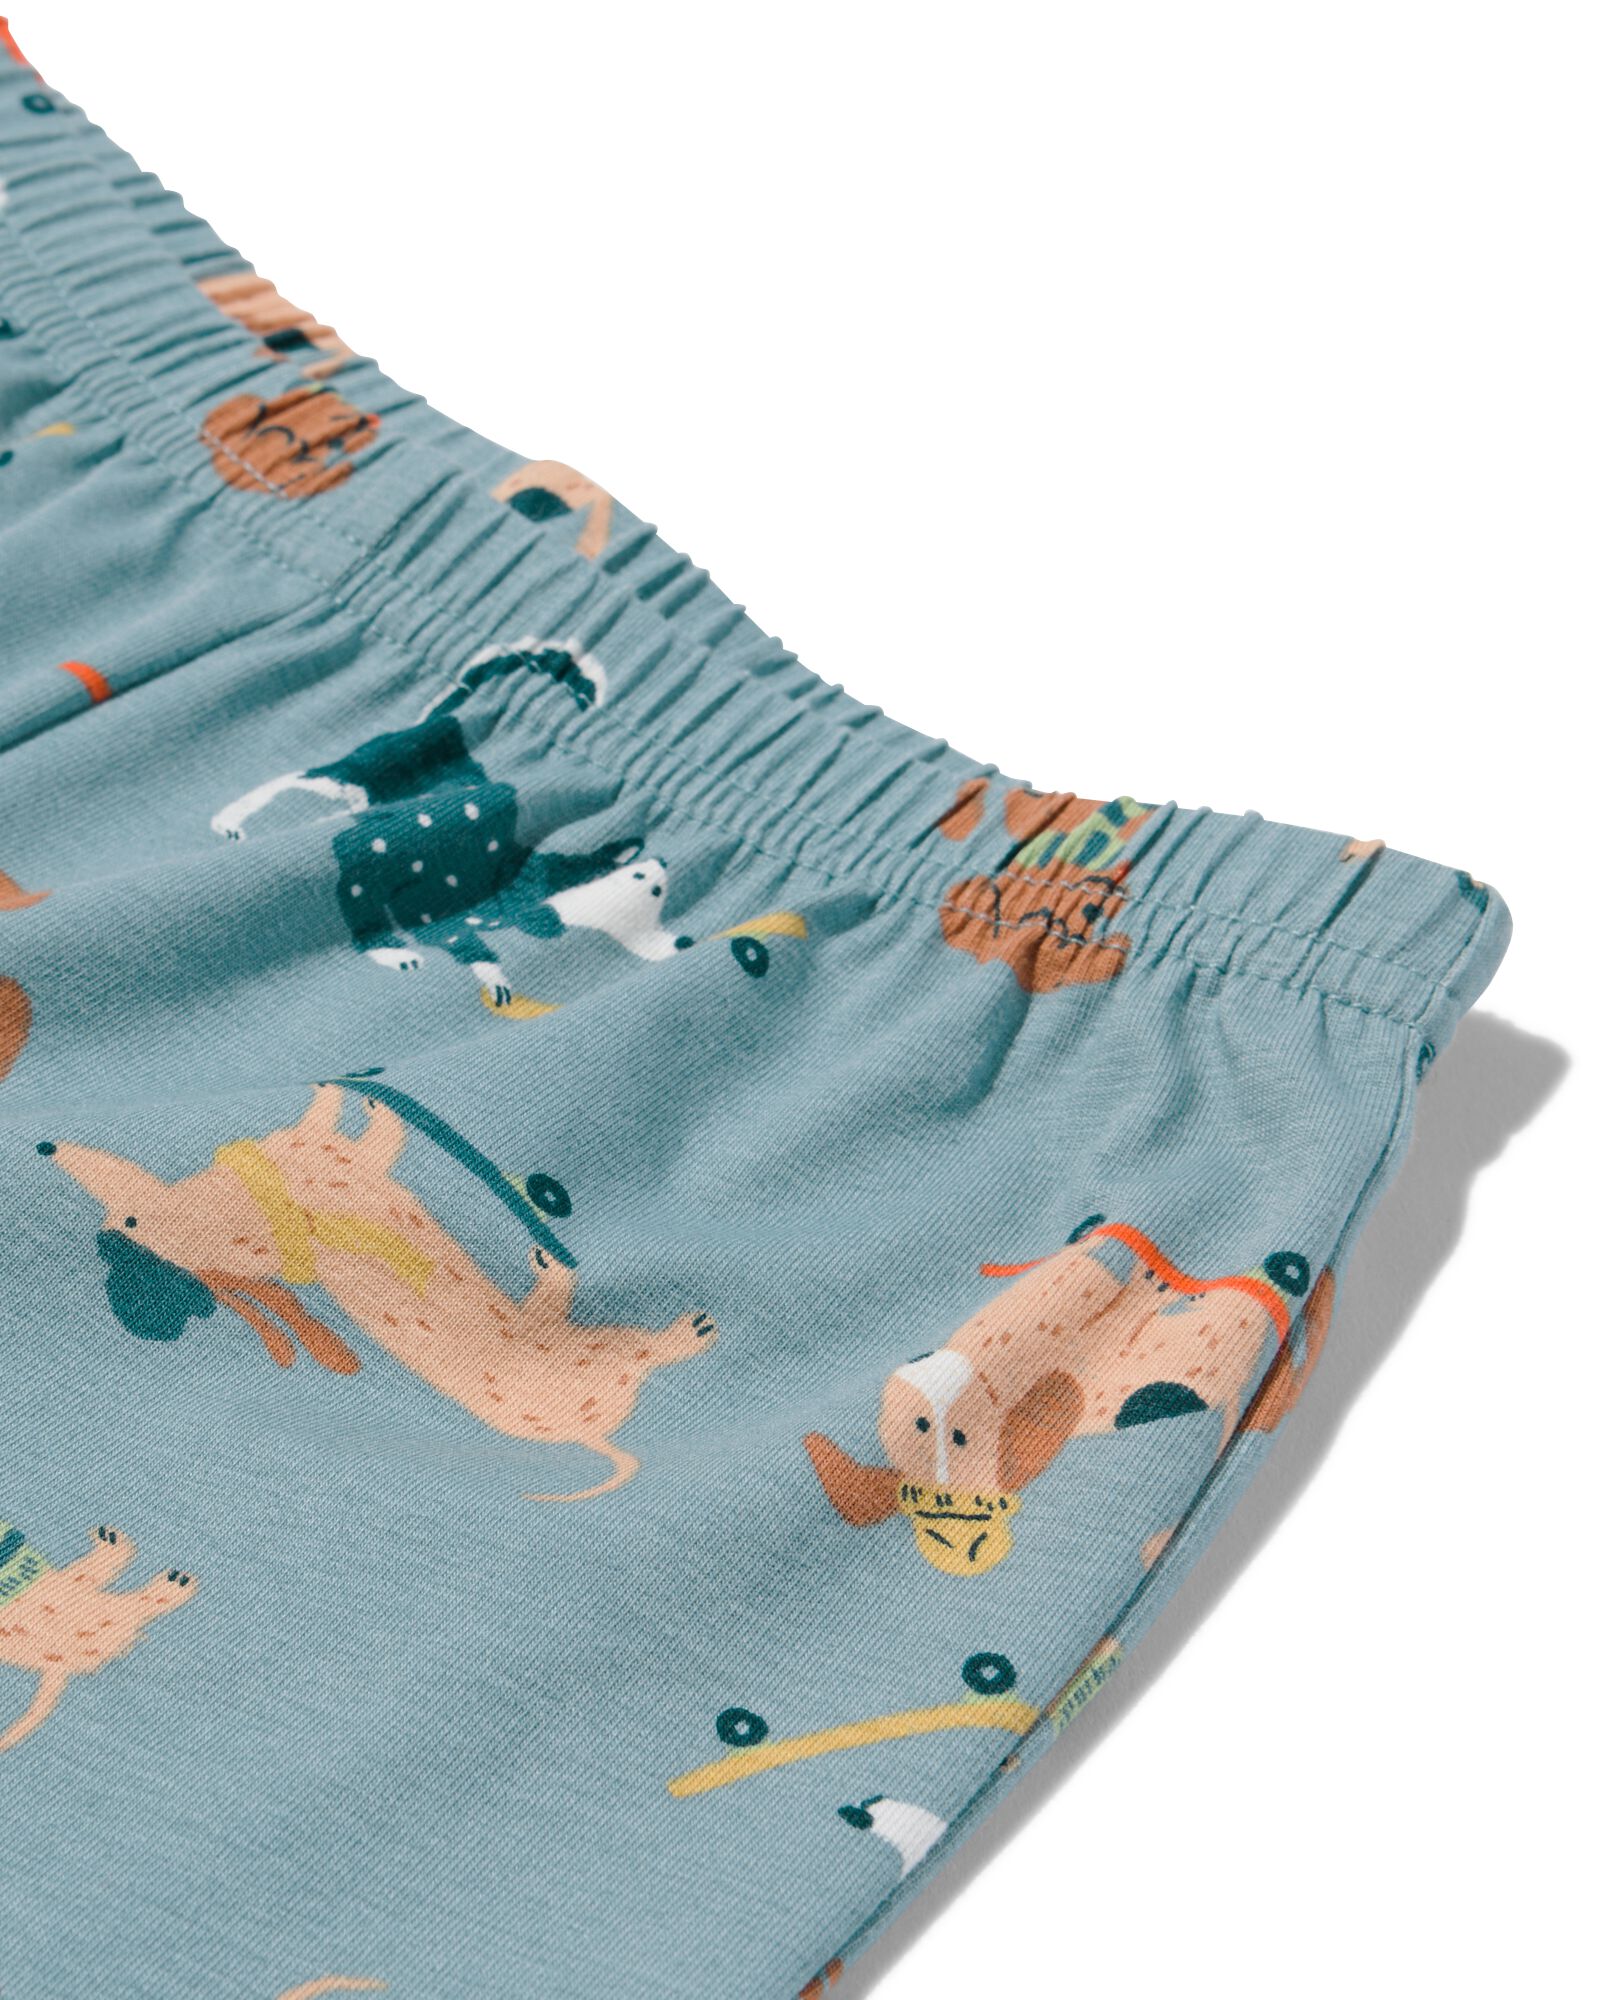 pyjama enfant avec pyjama pour poupée chiens bleu moyen 86/92 - 23090581 - HEMA